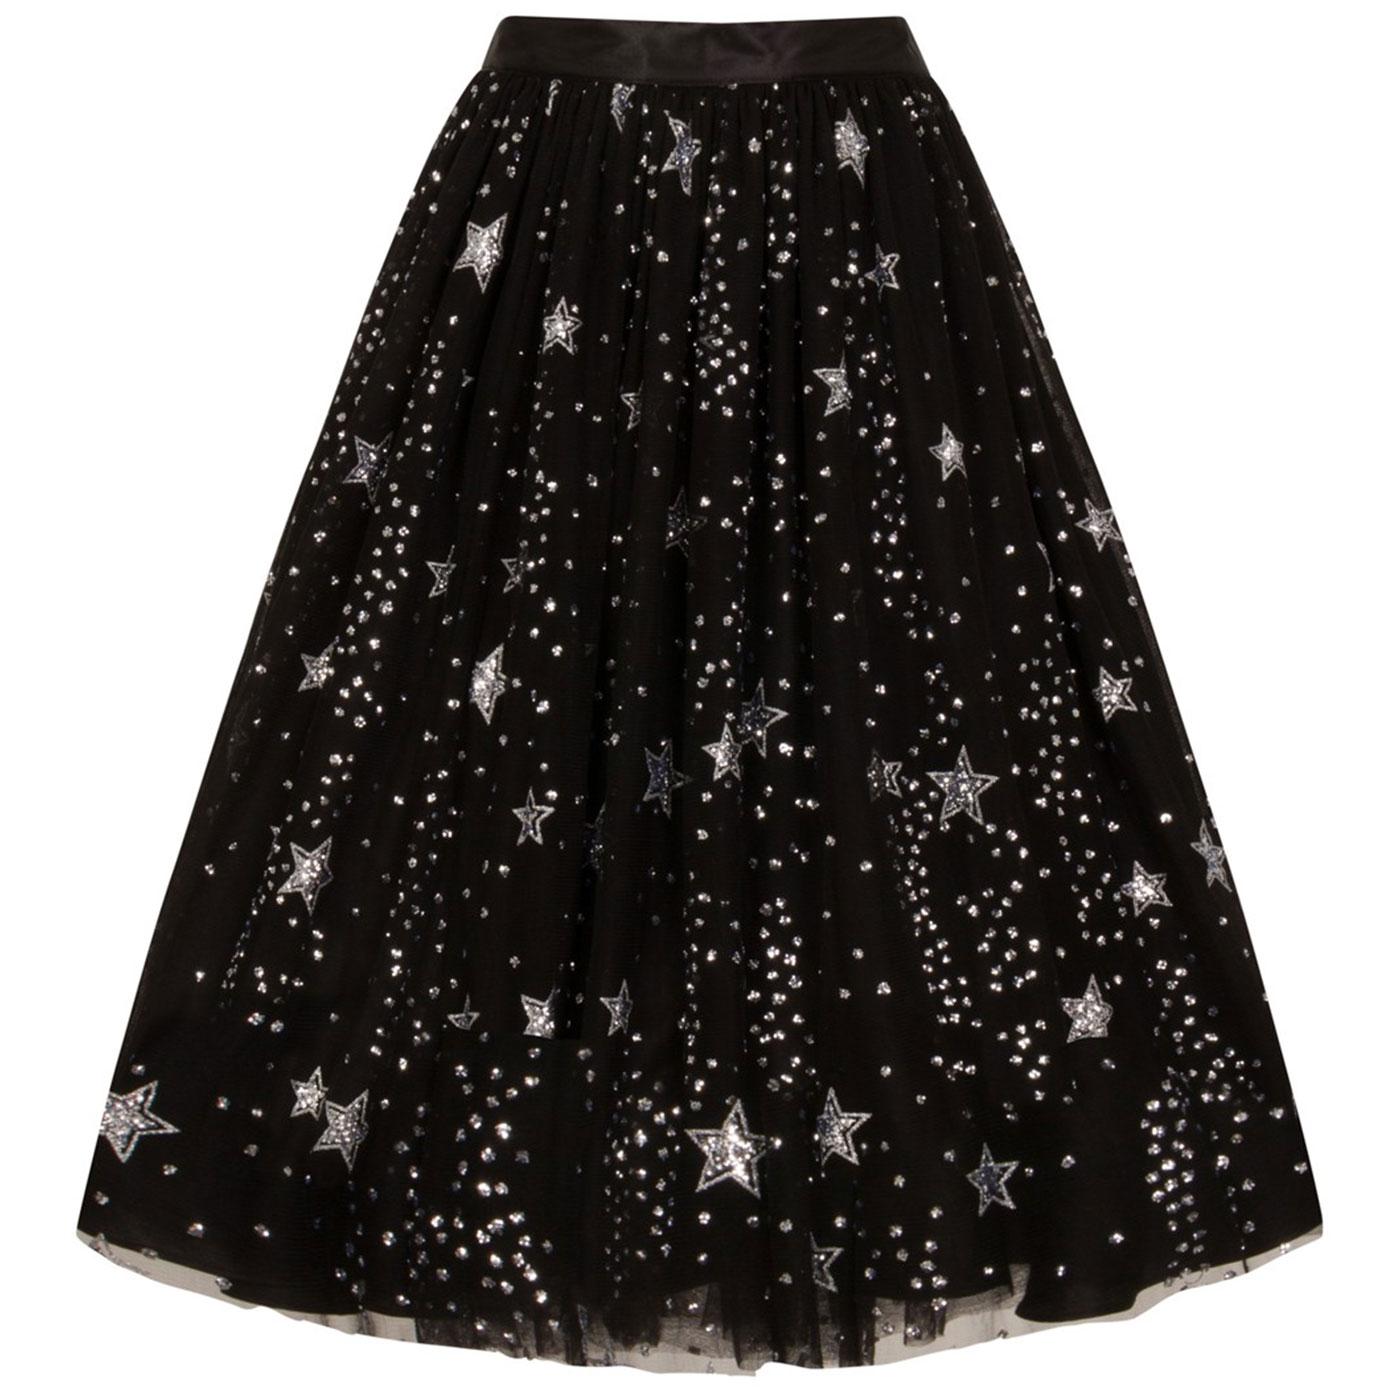 HELL BUNNY Cosmic Love Vintage Stars Tulle Skirt in Black